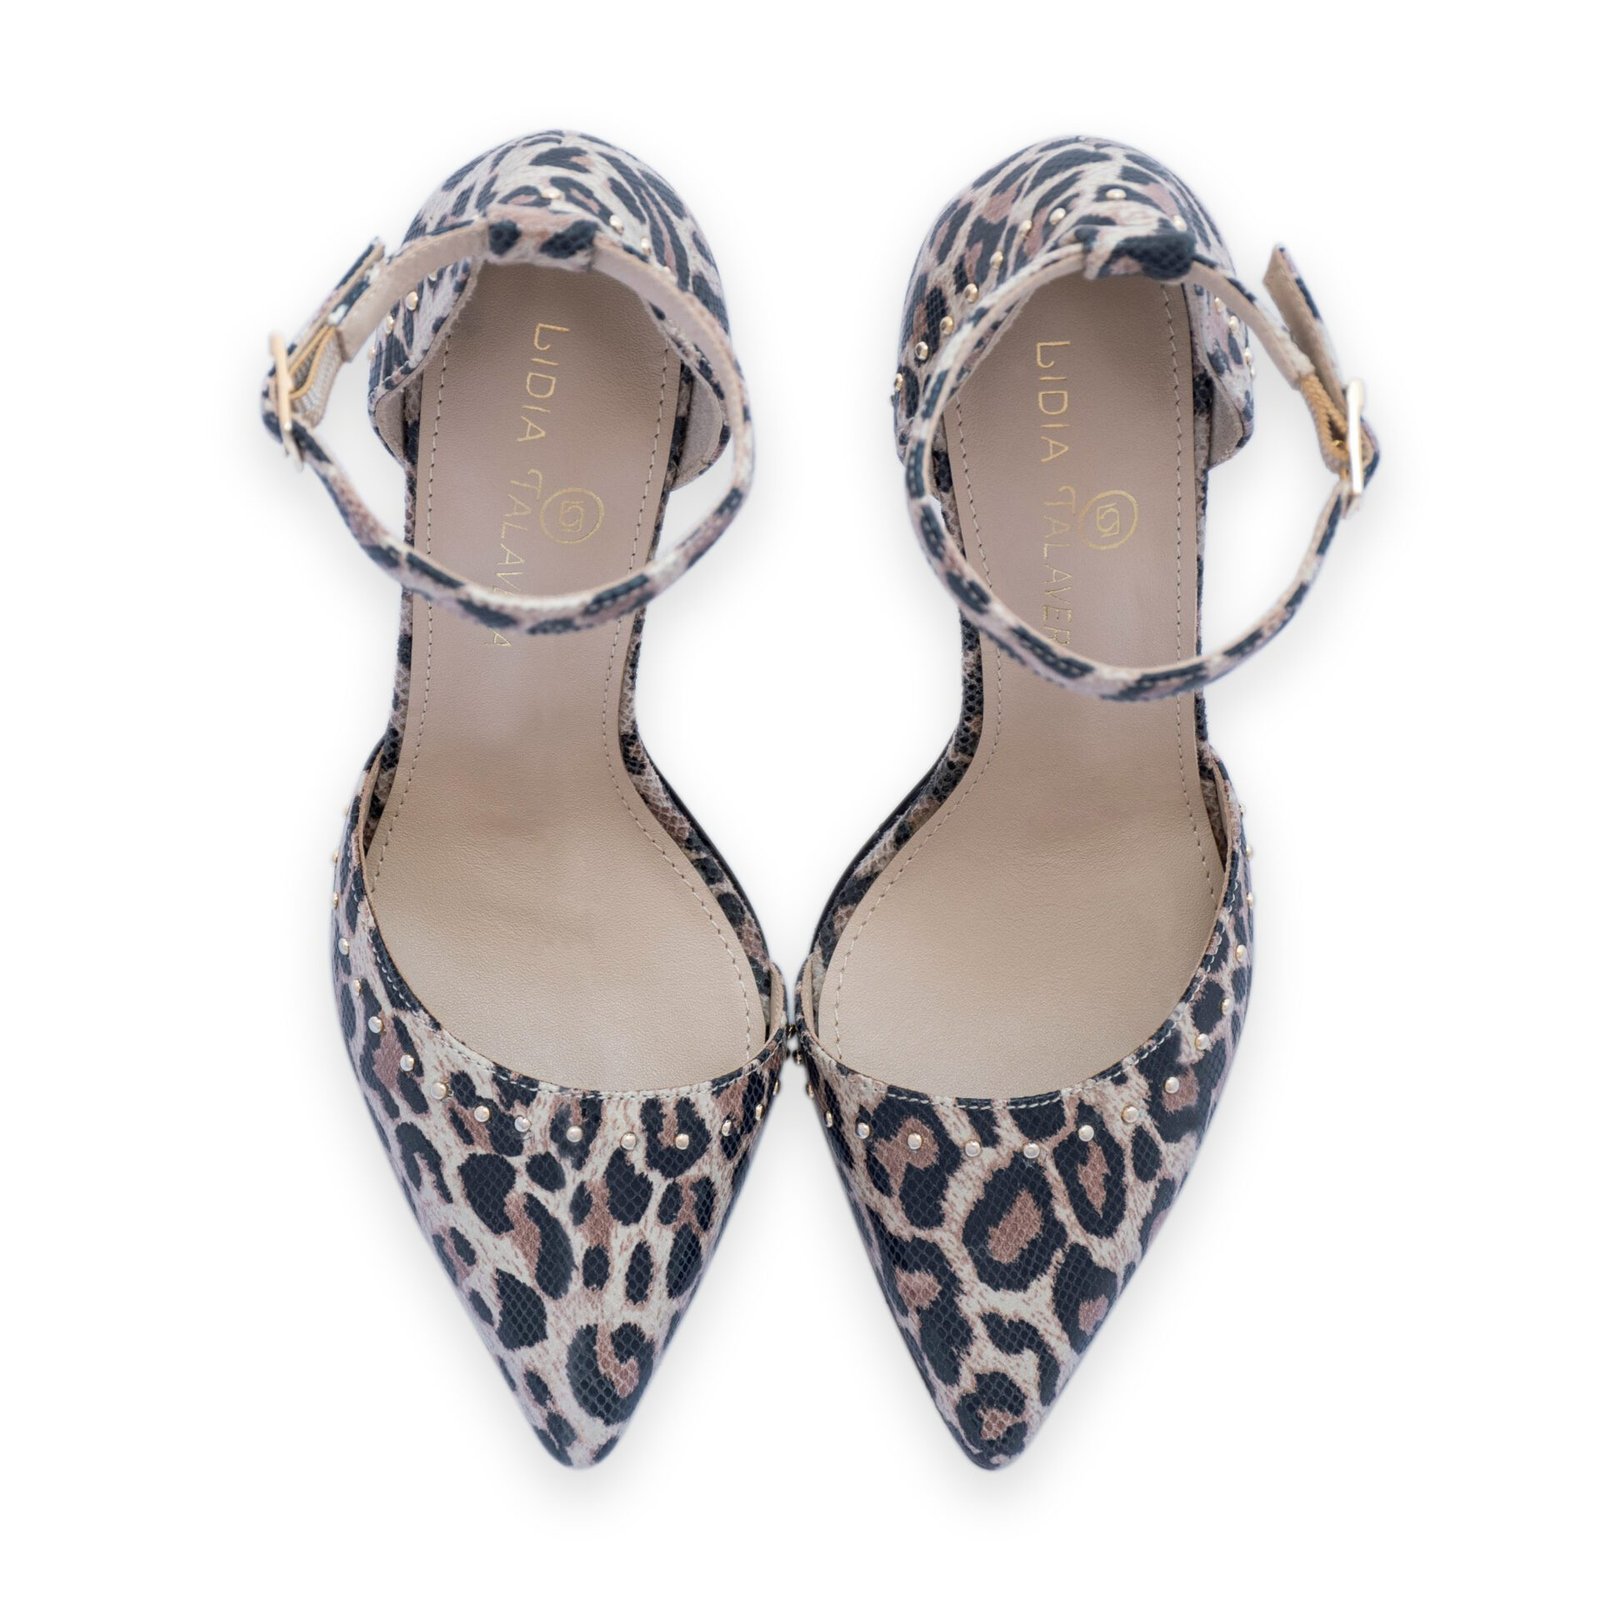 Leopard print wedding shoes